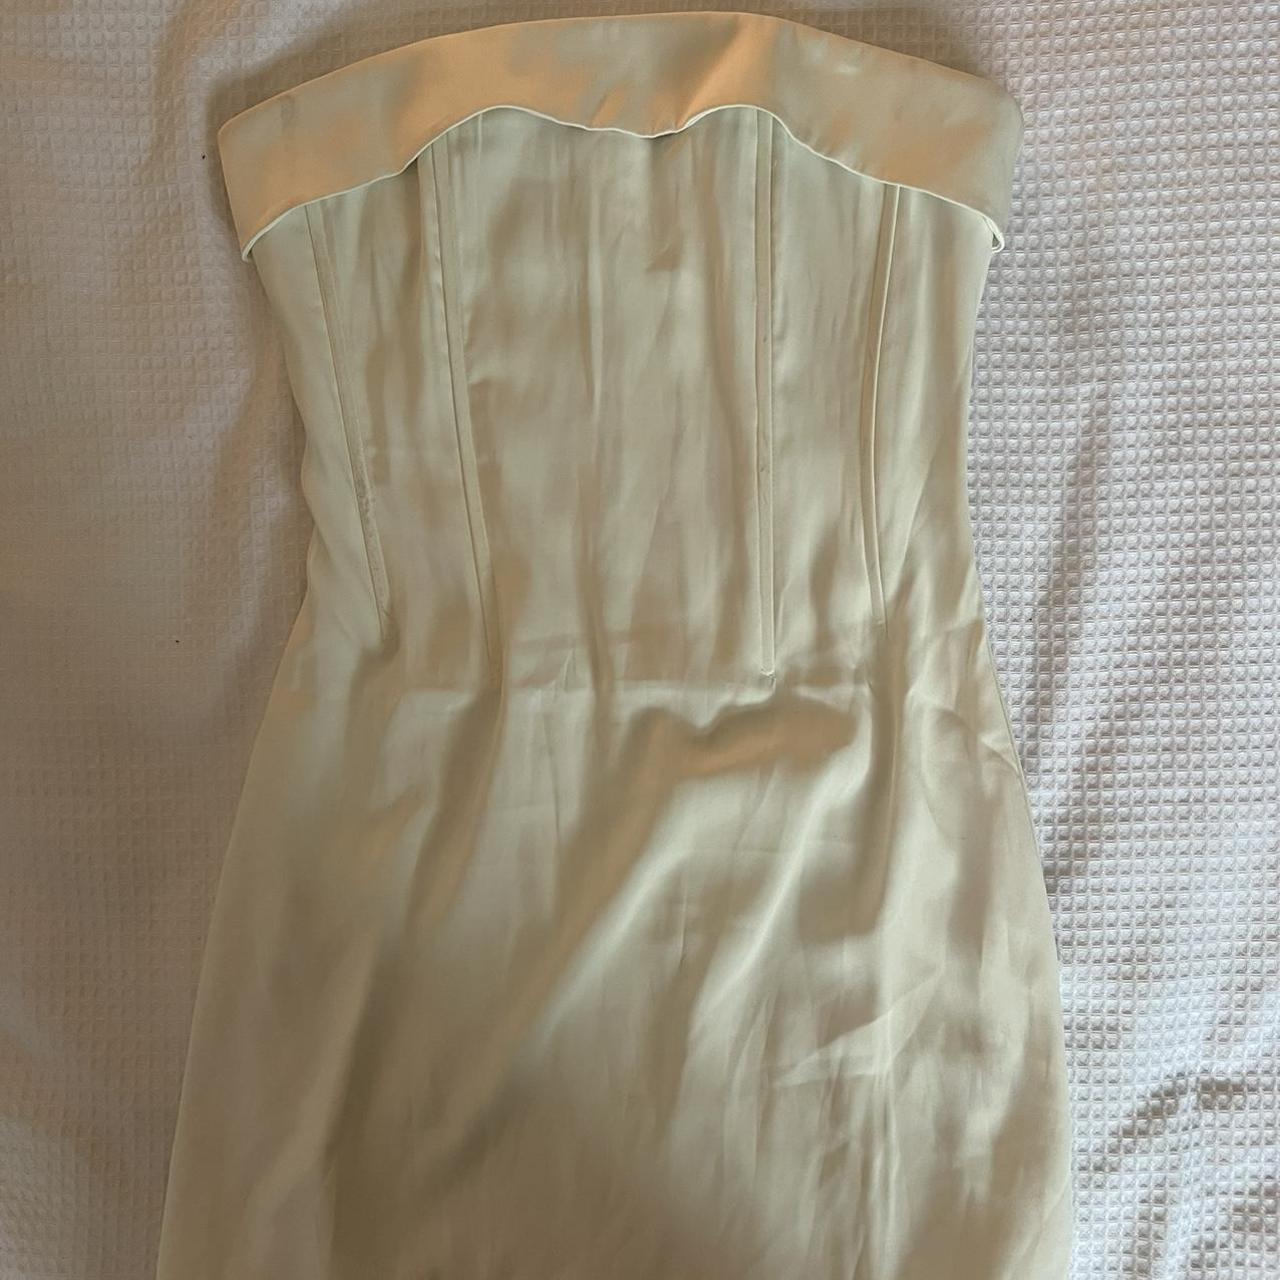 WITH JEAN, Chloe Corset Dress. WHITE! Size S, worn... - Depop